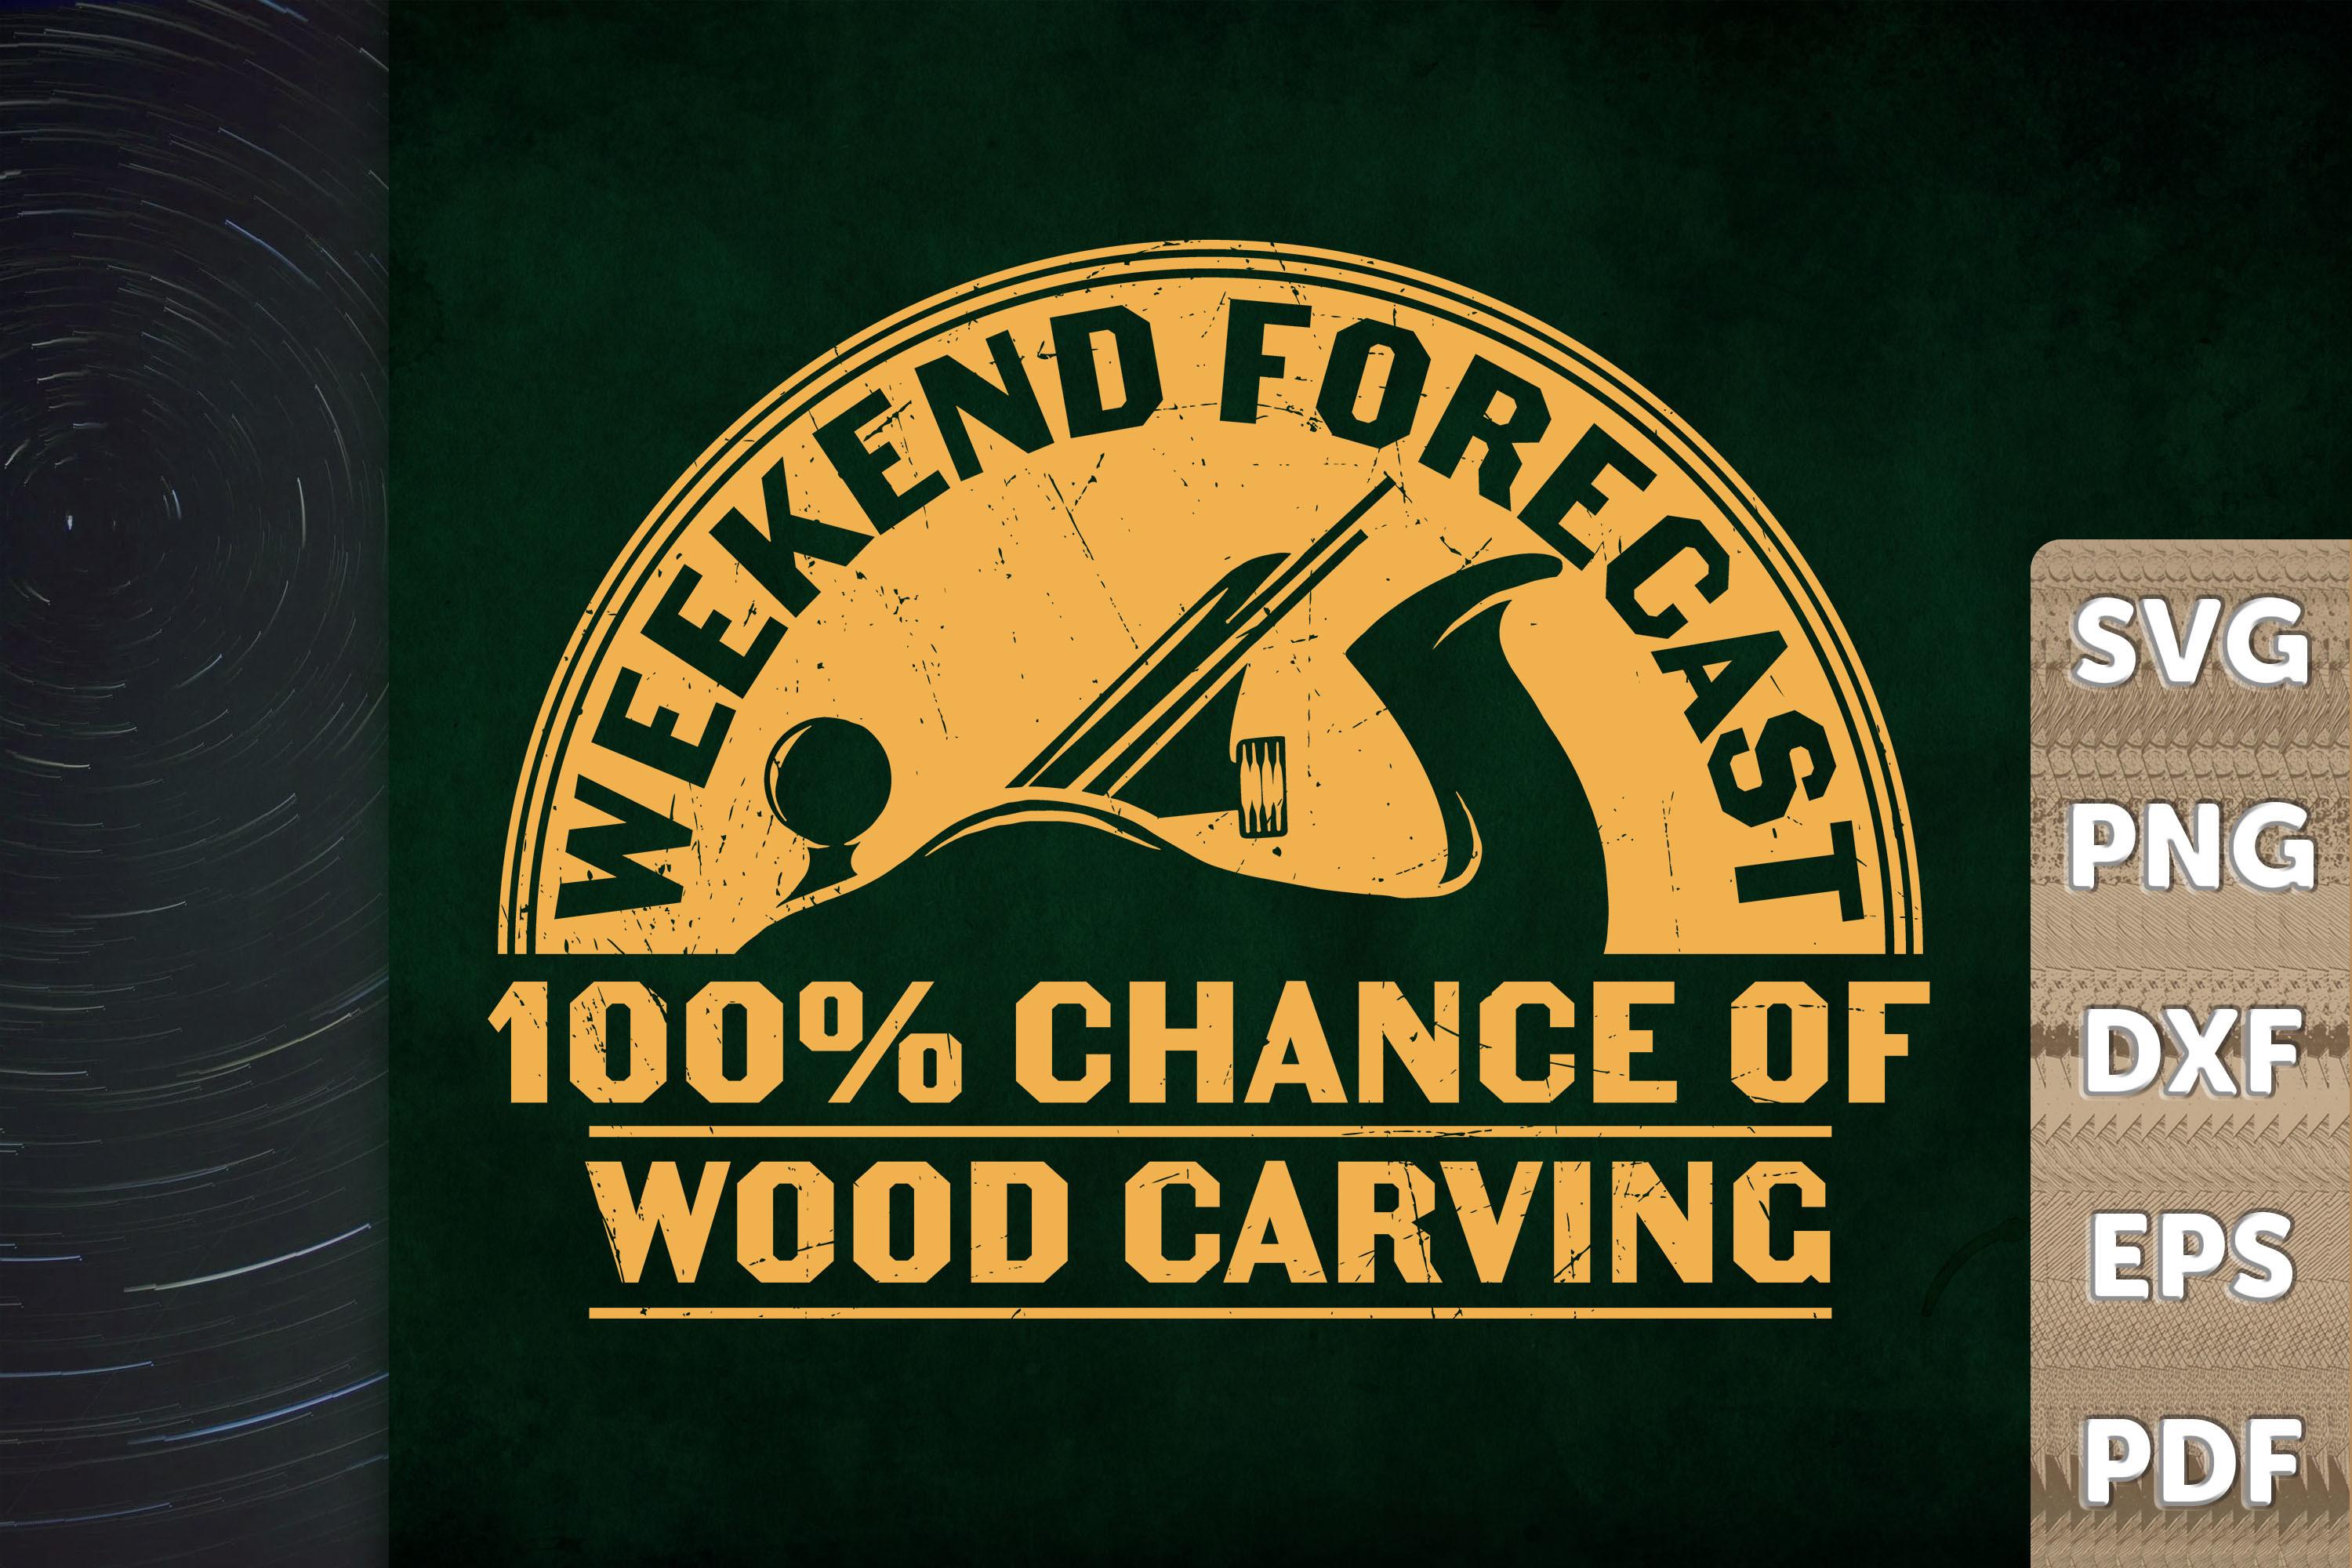 Weekend Forecast 100% Change of Wood